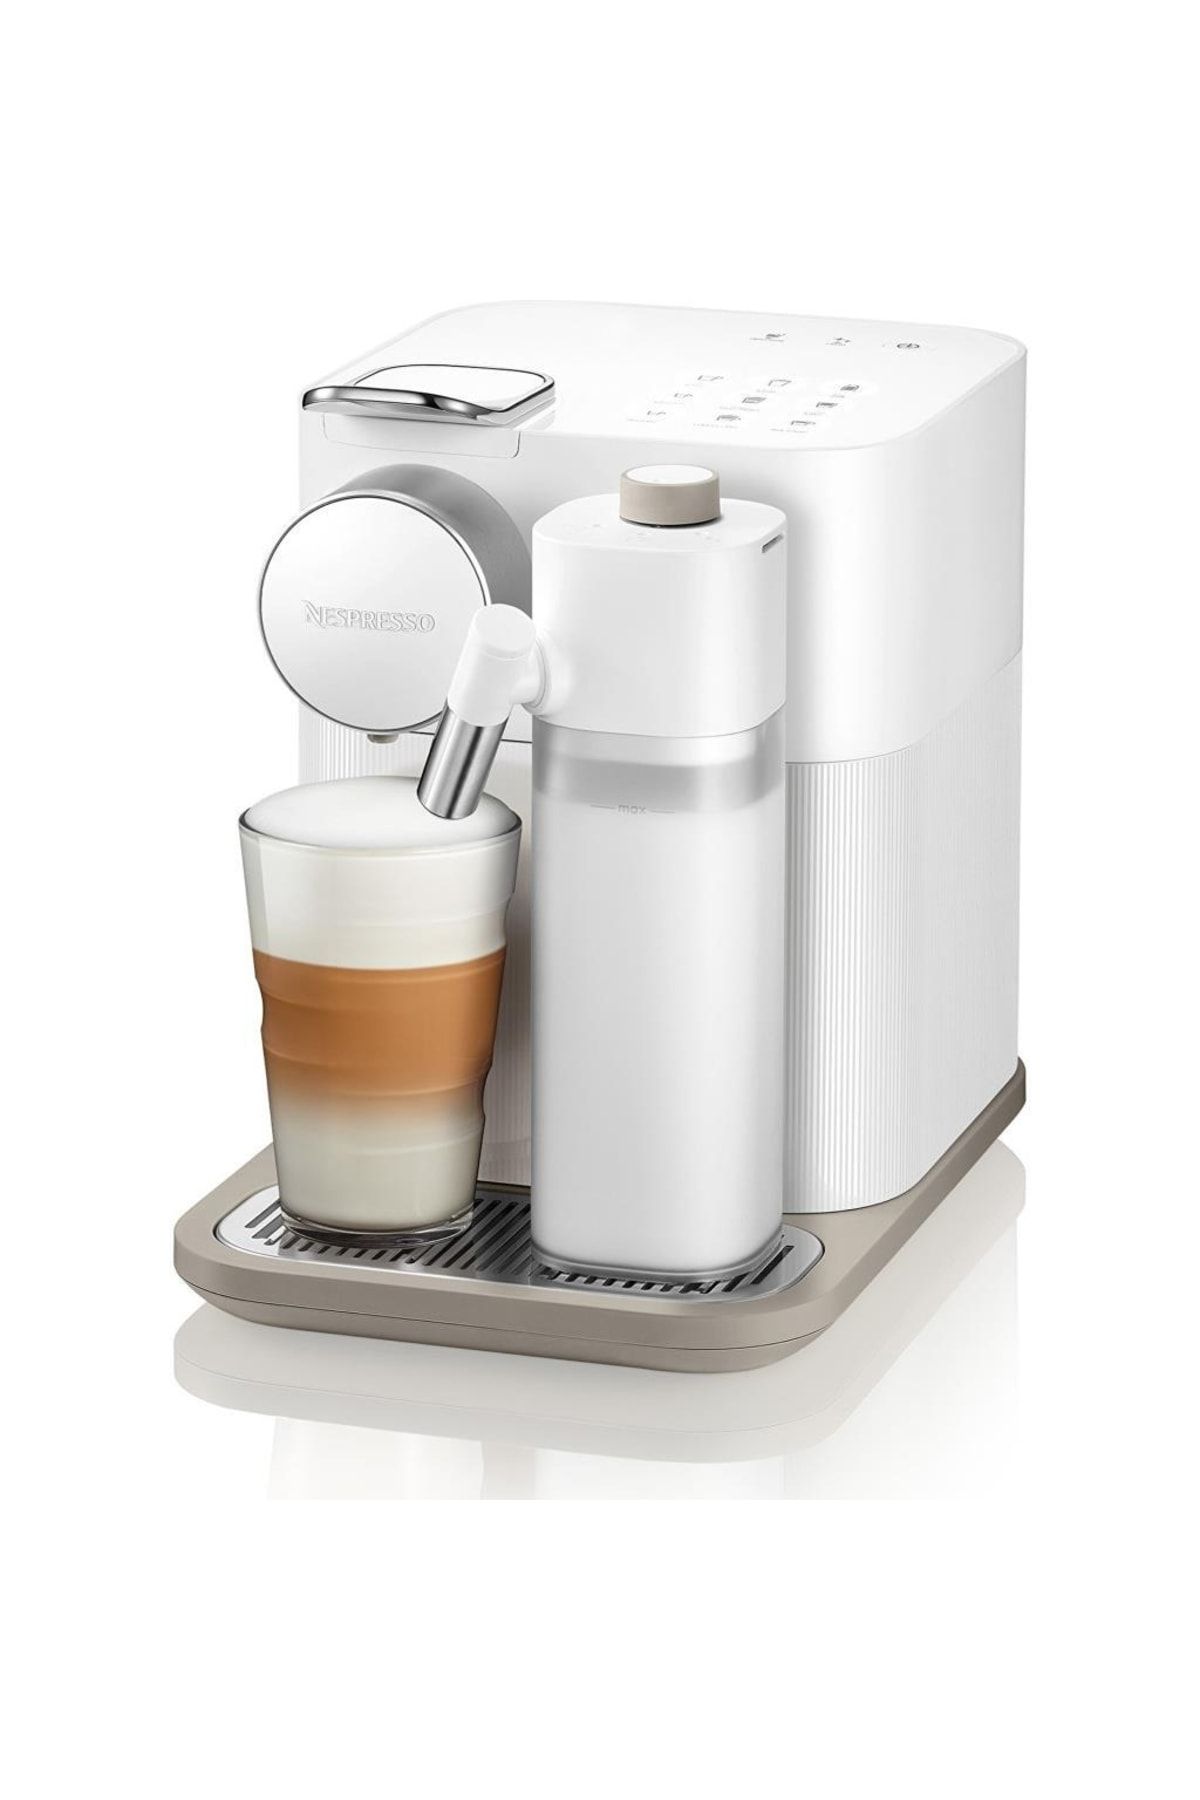 Nespresso F541 Grand Lattissima White Kahve Makinesi,Beyaz